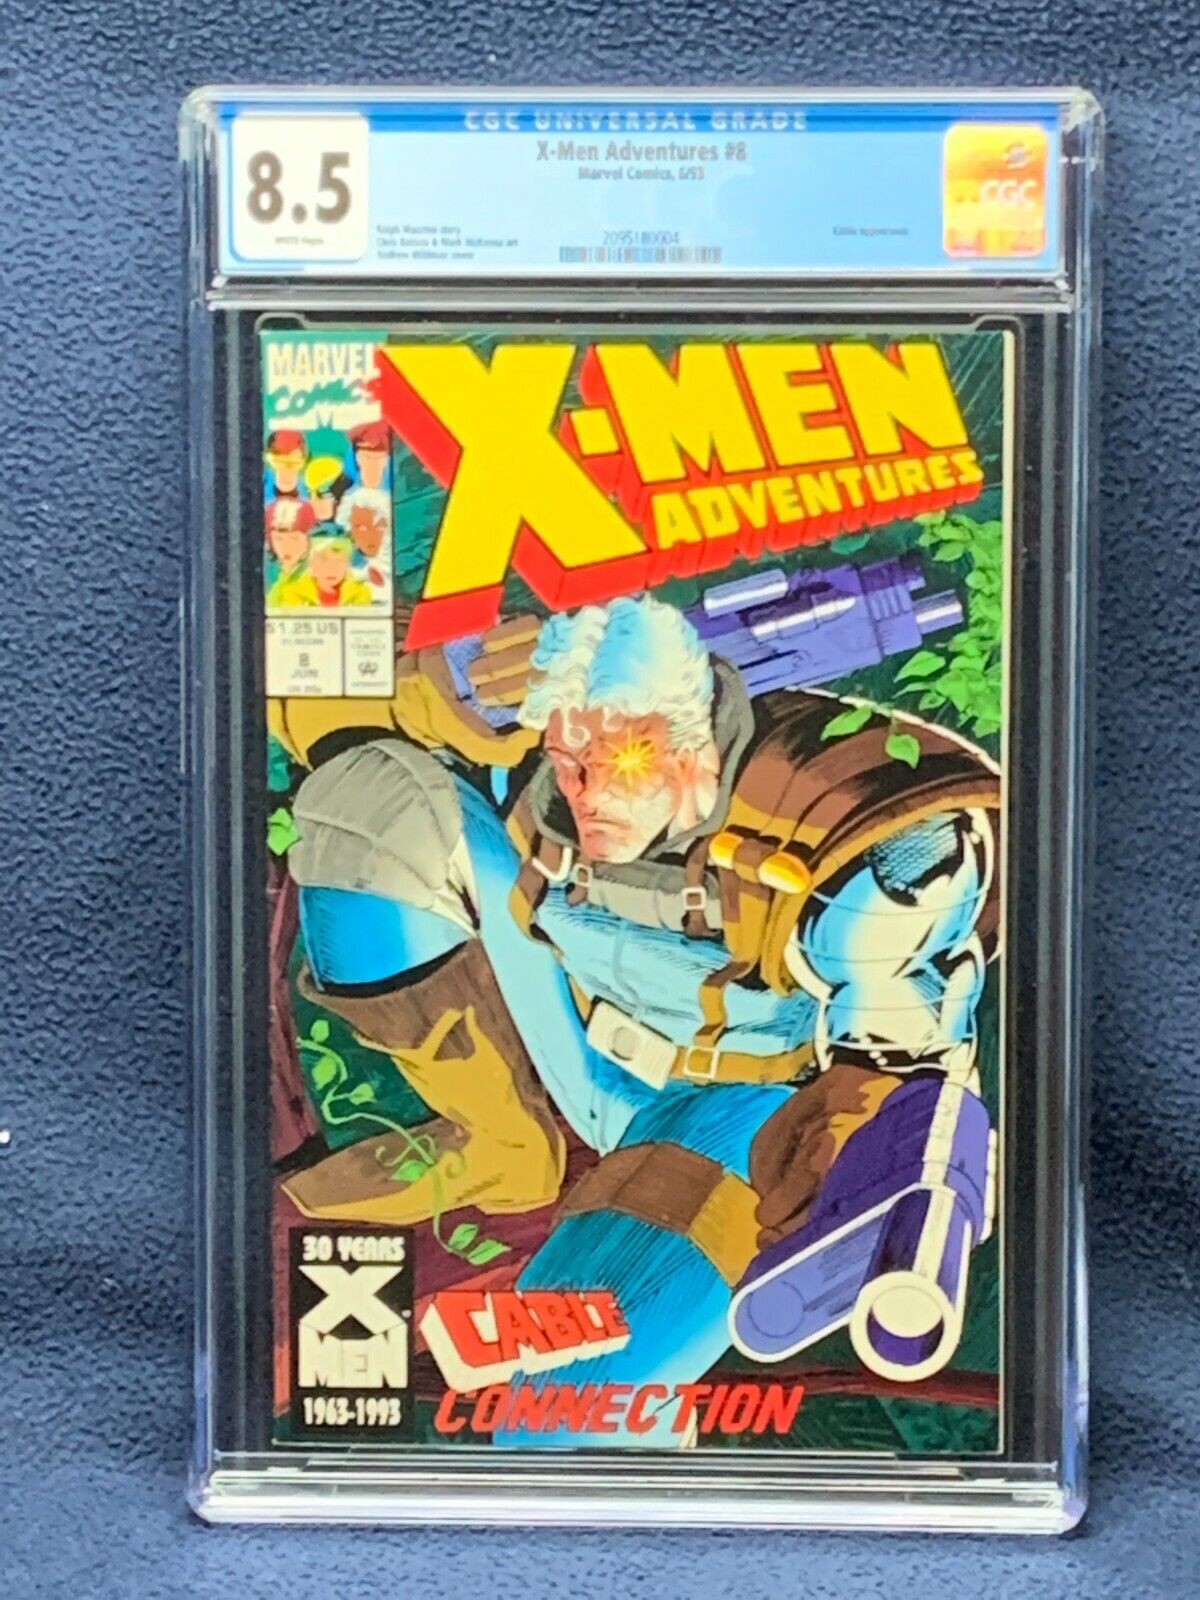 X-Men Adventures #8 Vol 1 Comic Book - CGC 8.5